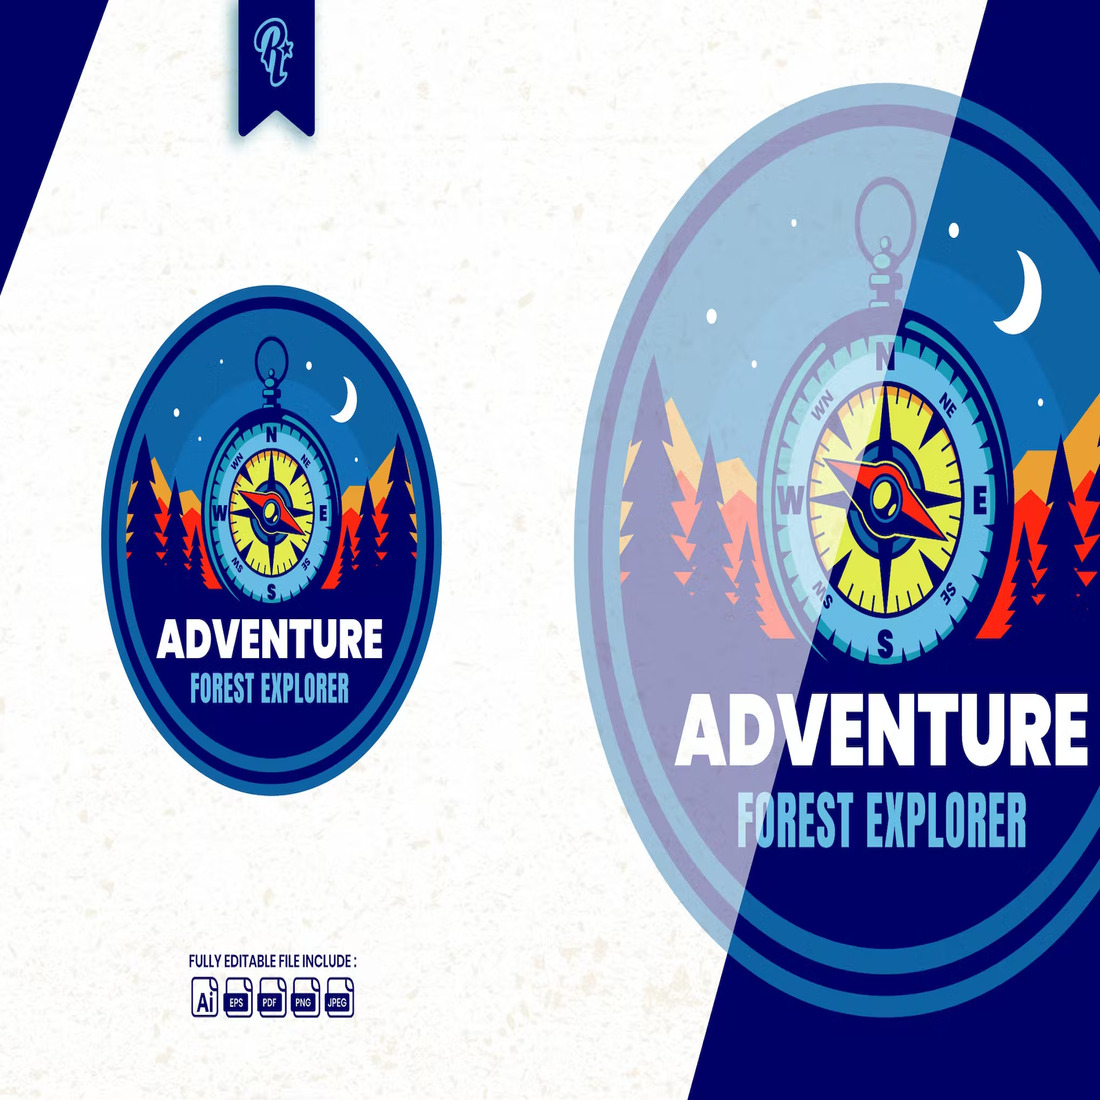 Adventure Compass Badge Logo cover image.